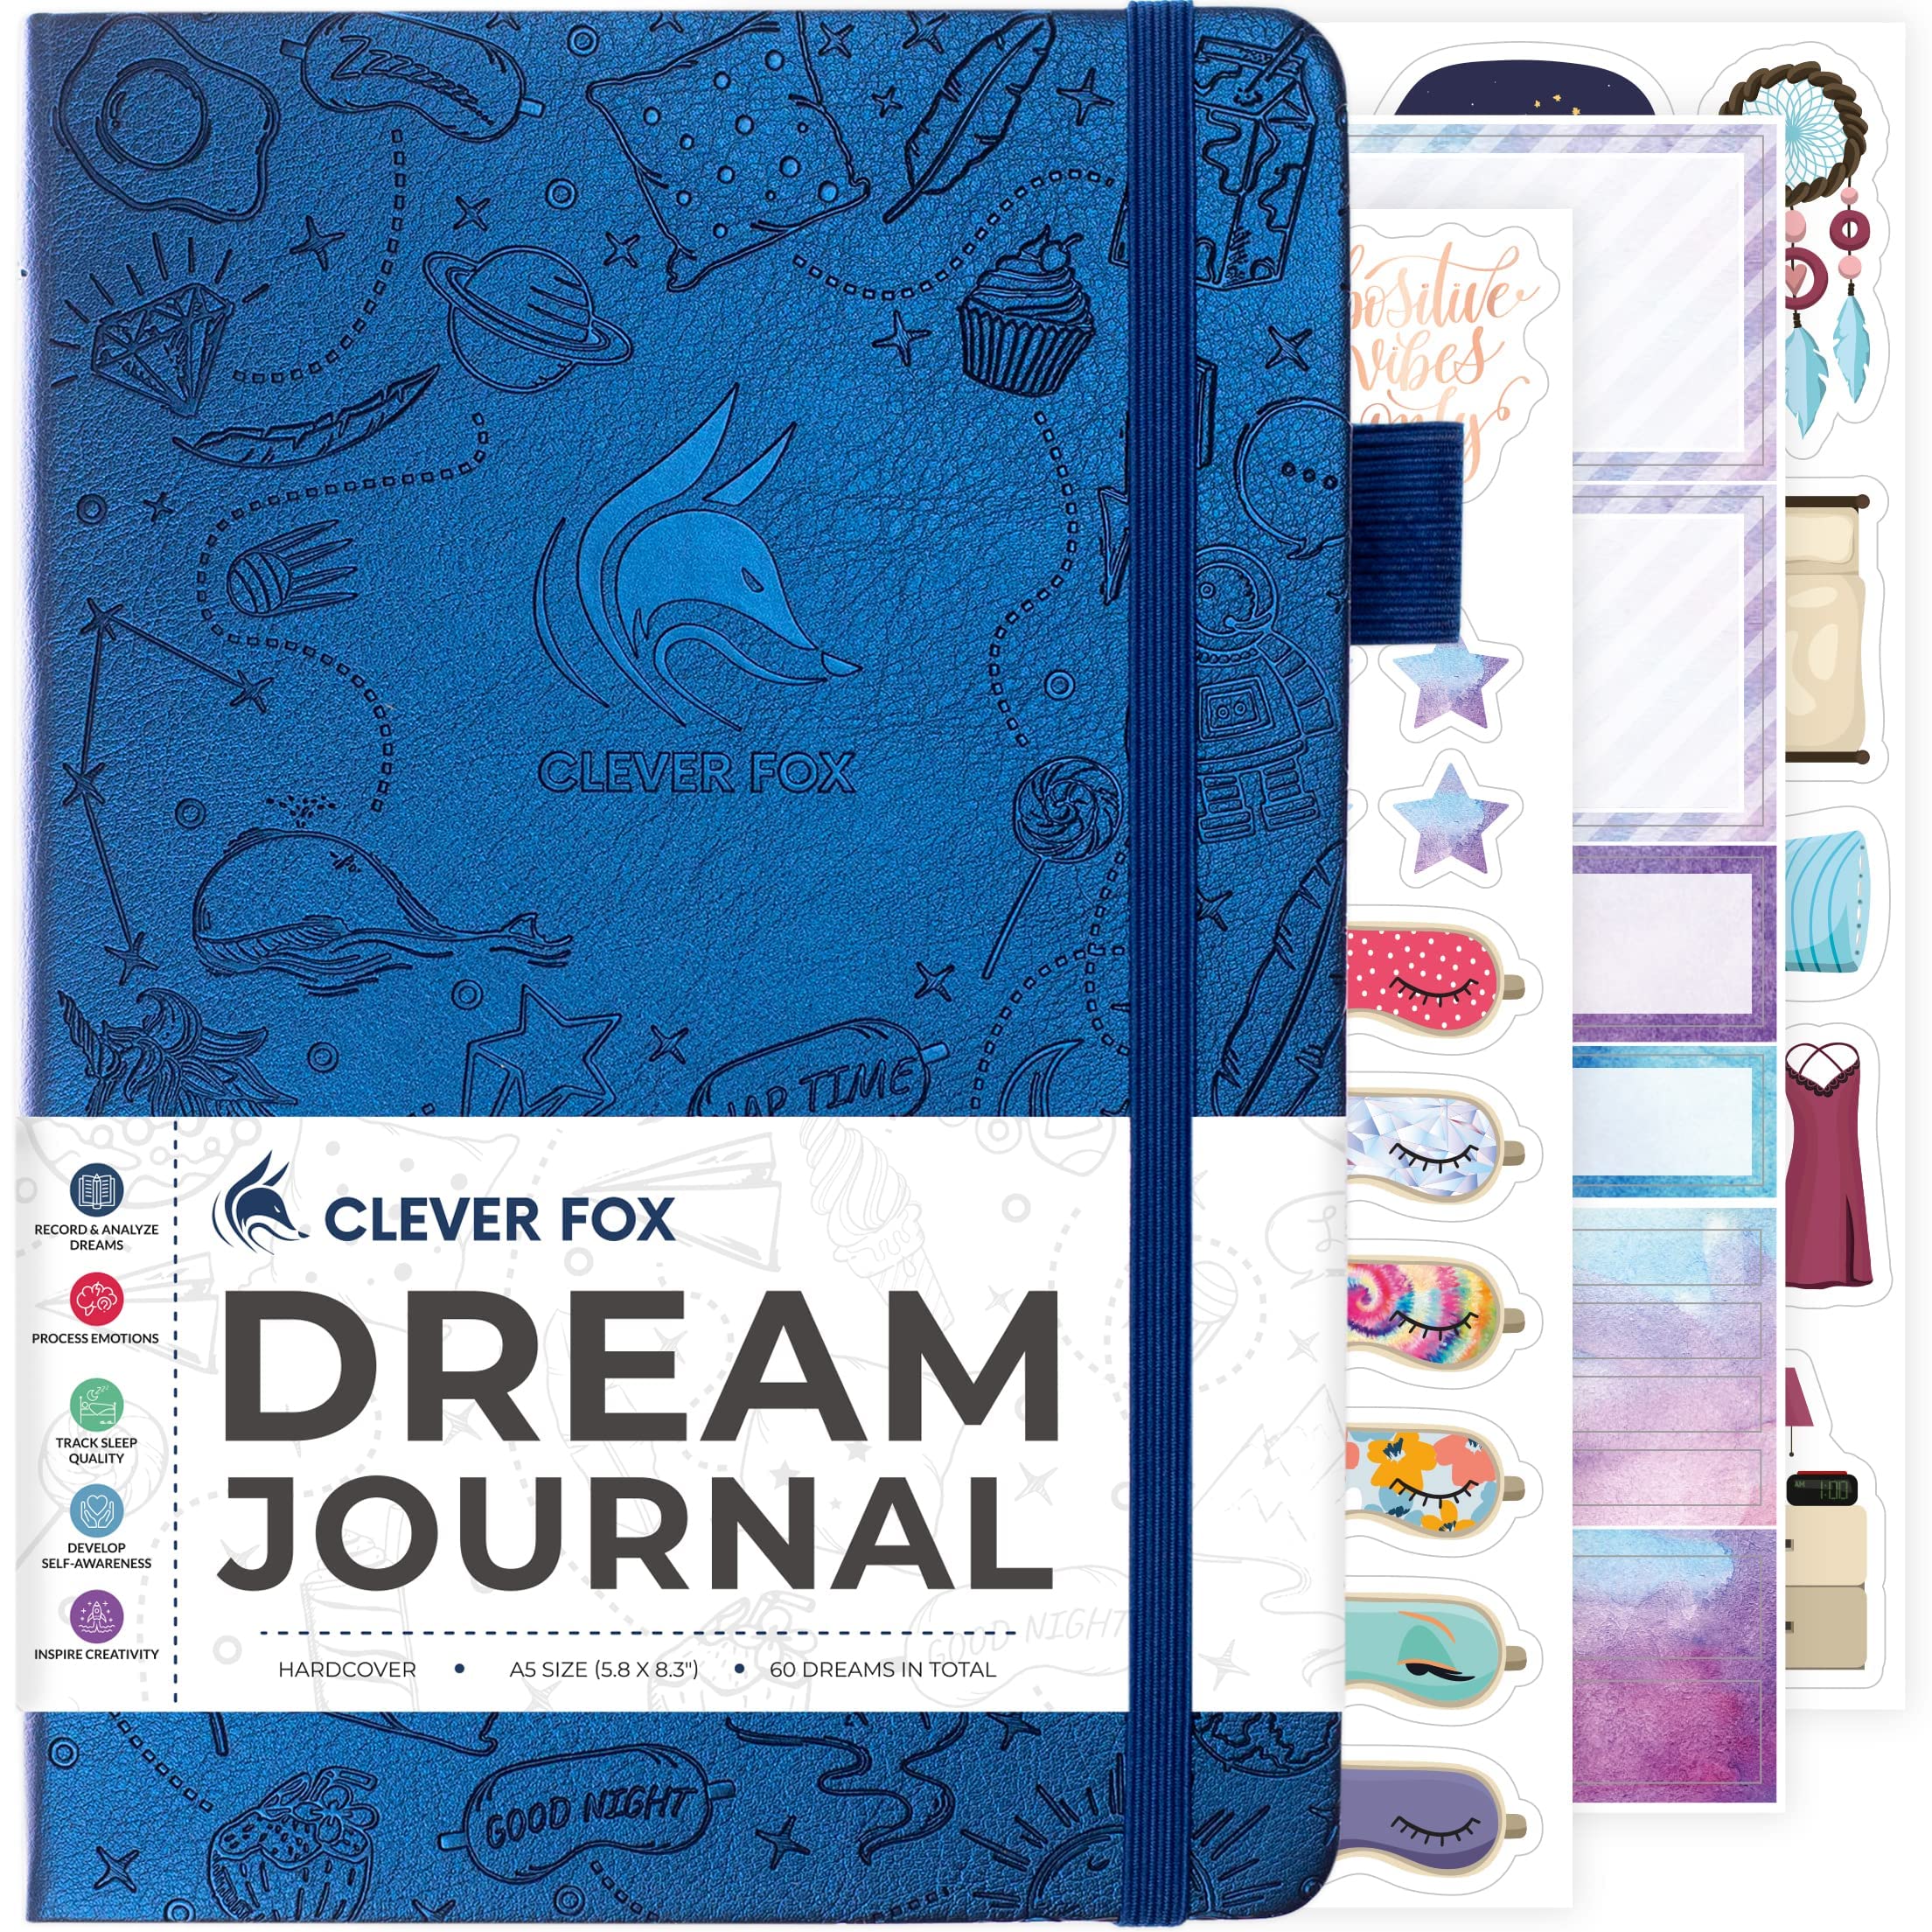 Dream journal or notebook